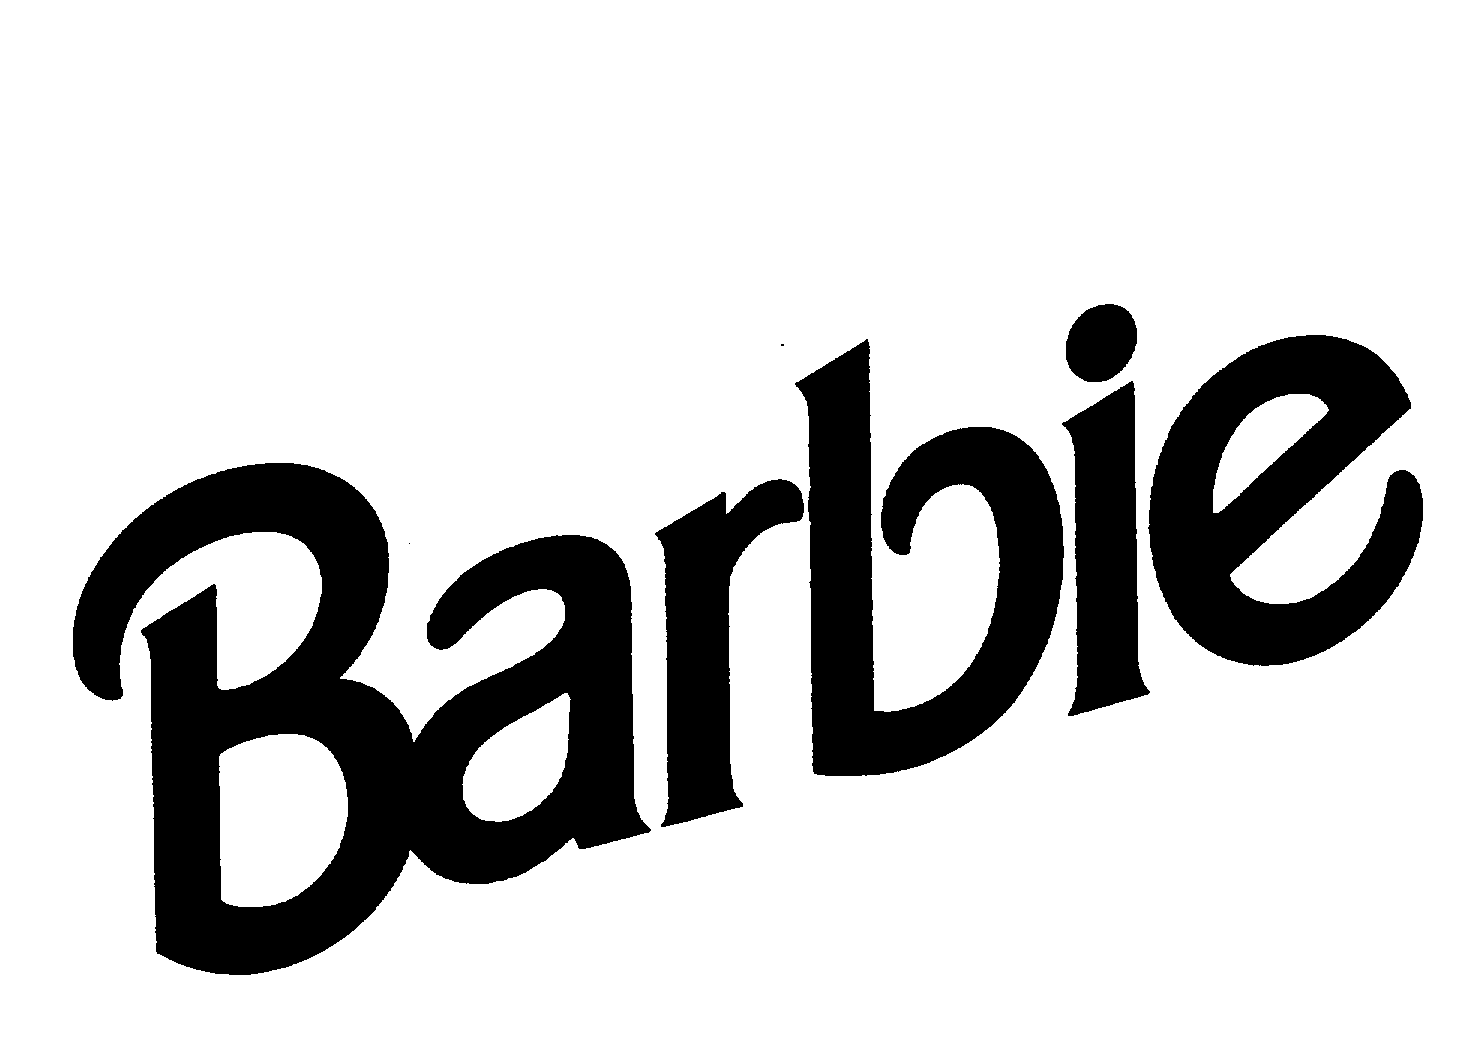 BARBIE